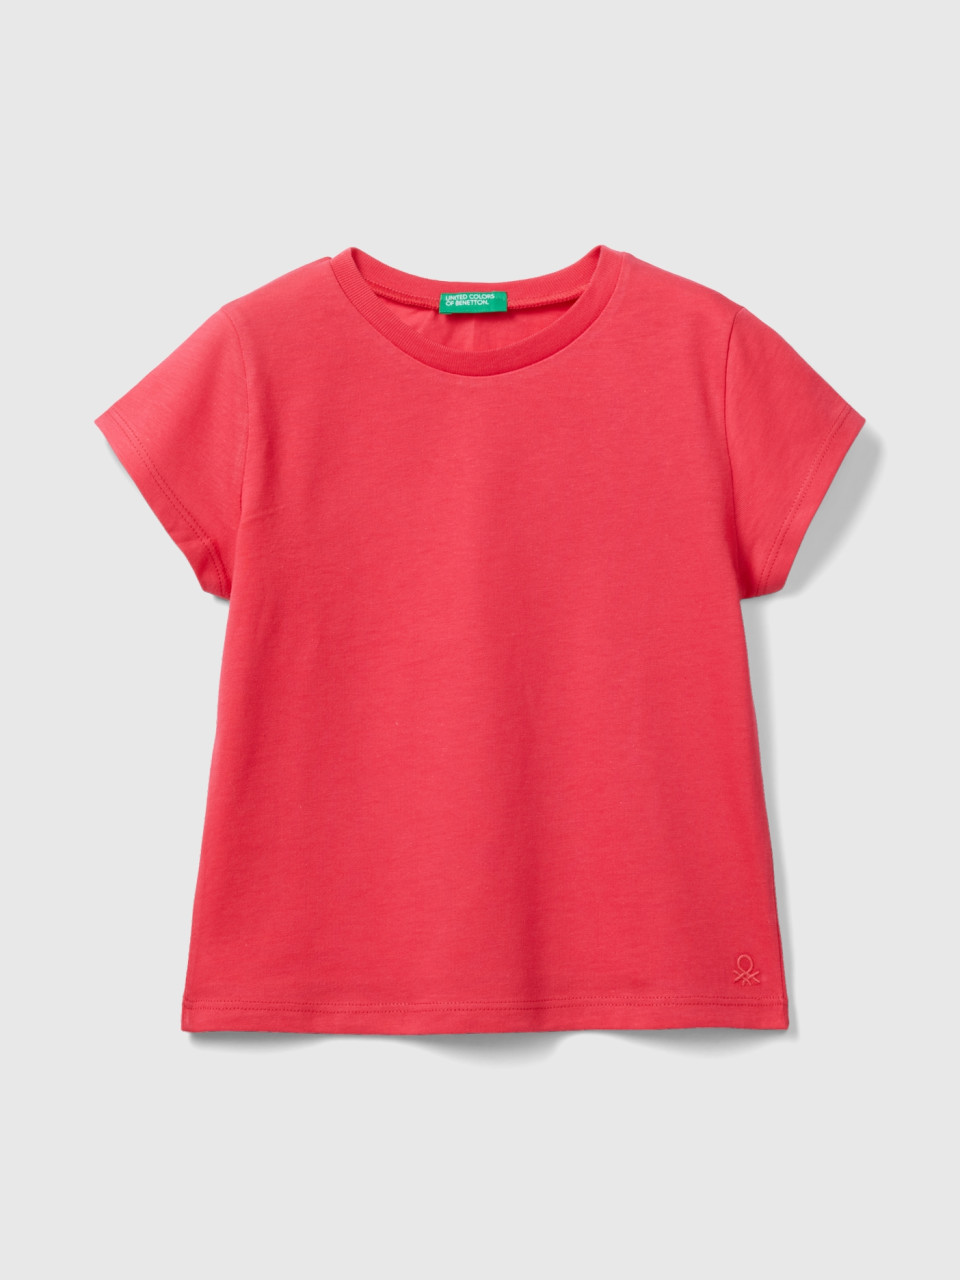 Benetton, 100% Organic Cotton T-shirt, Fuchsia, Kids